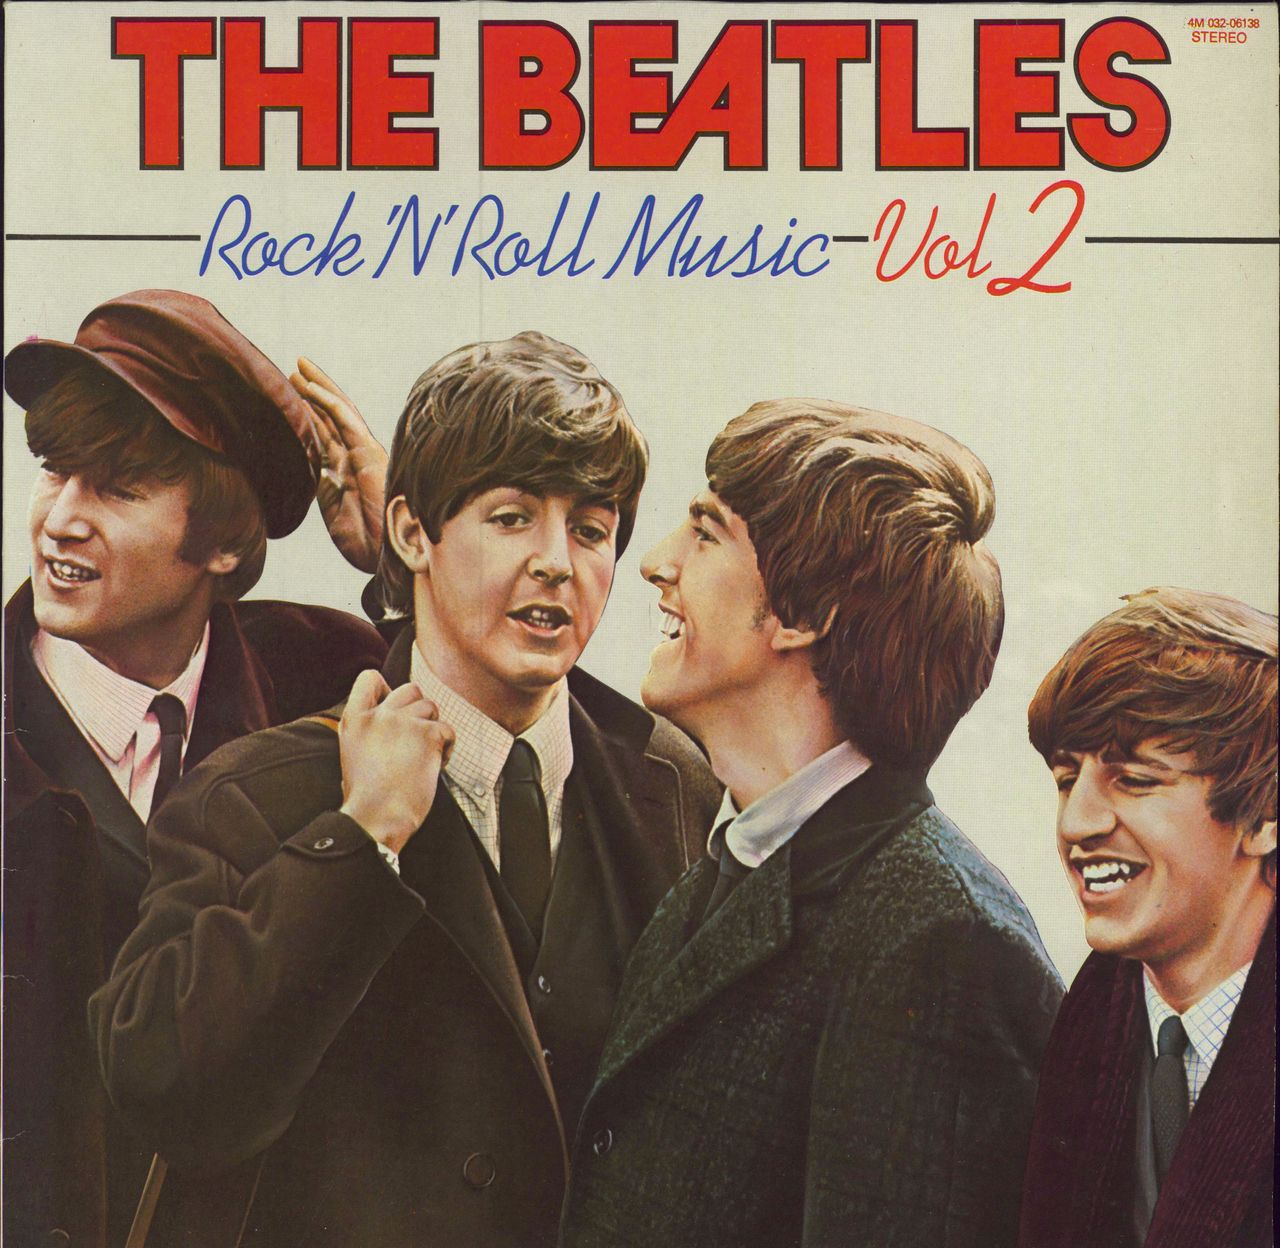 The Beatles Rock 'n' Roll Music Vol. 2 Belgian vinyl LP album (LP record) 4M032-06138